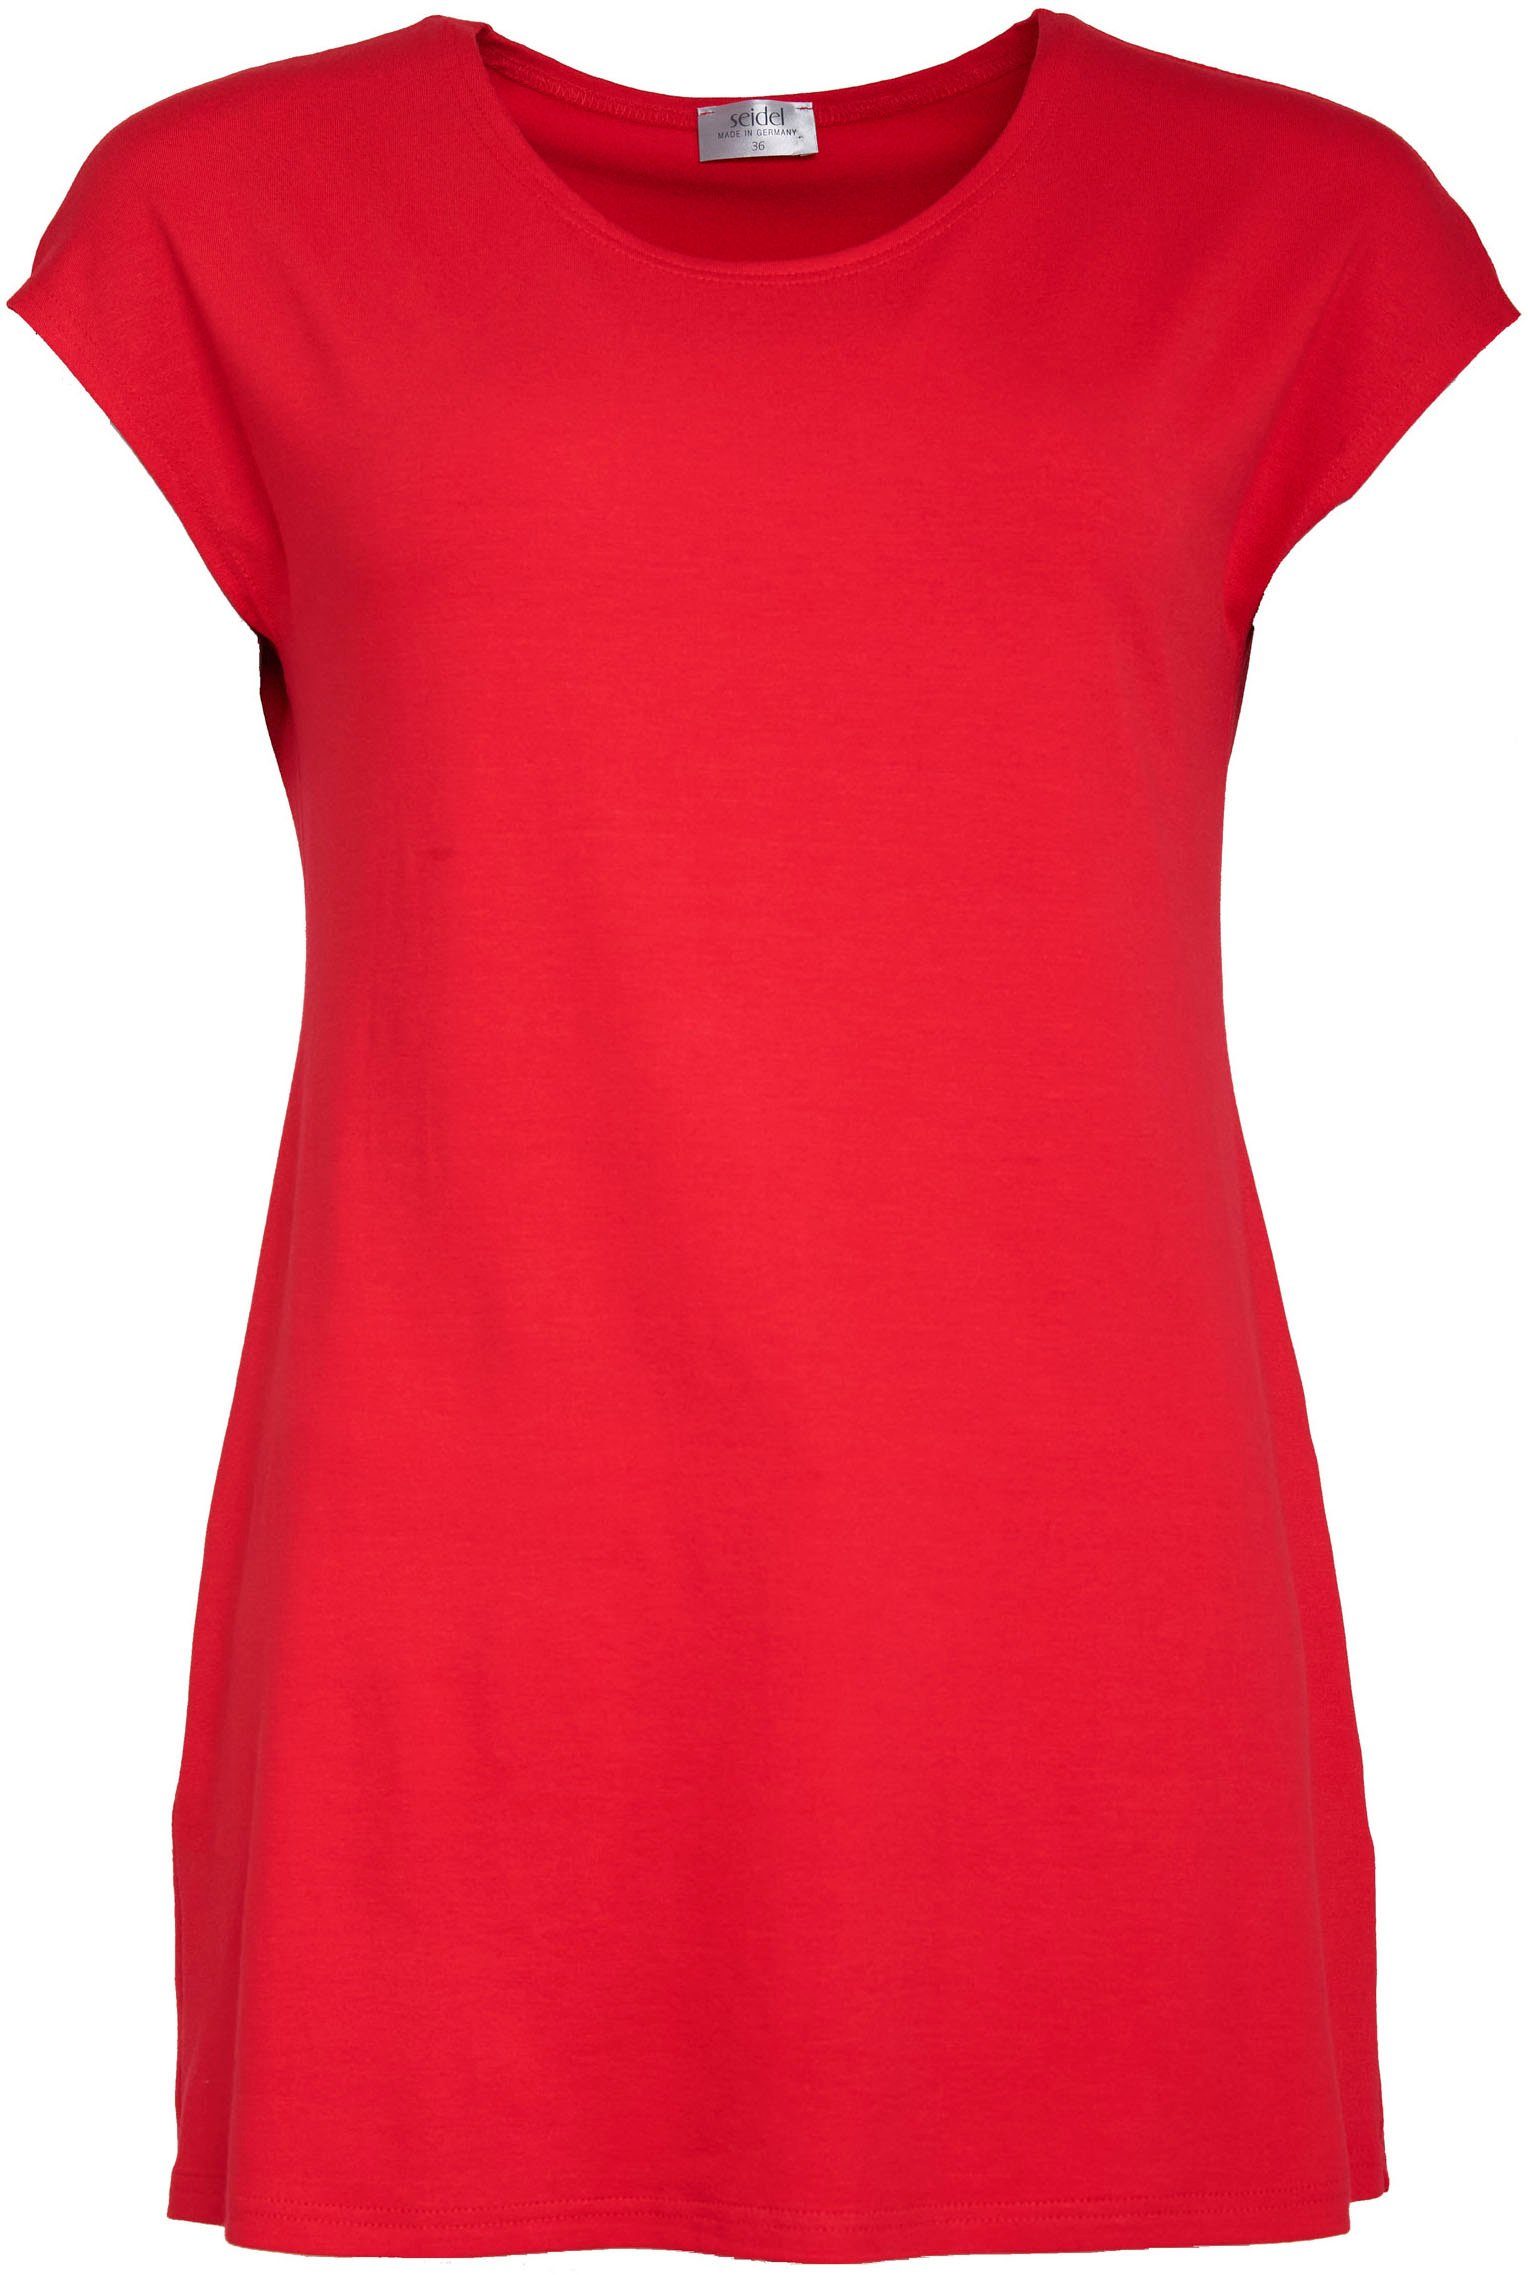 rot Design Seidel in Moden schlichtem Longshirt